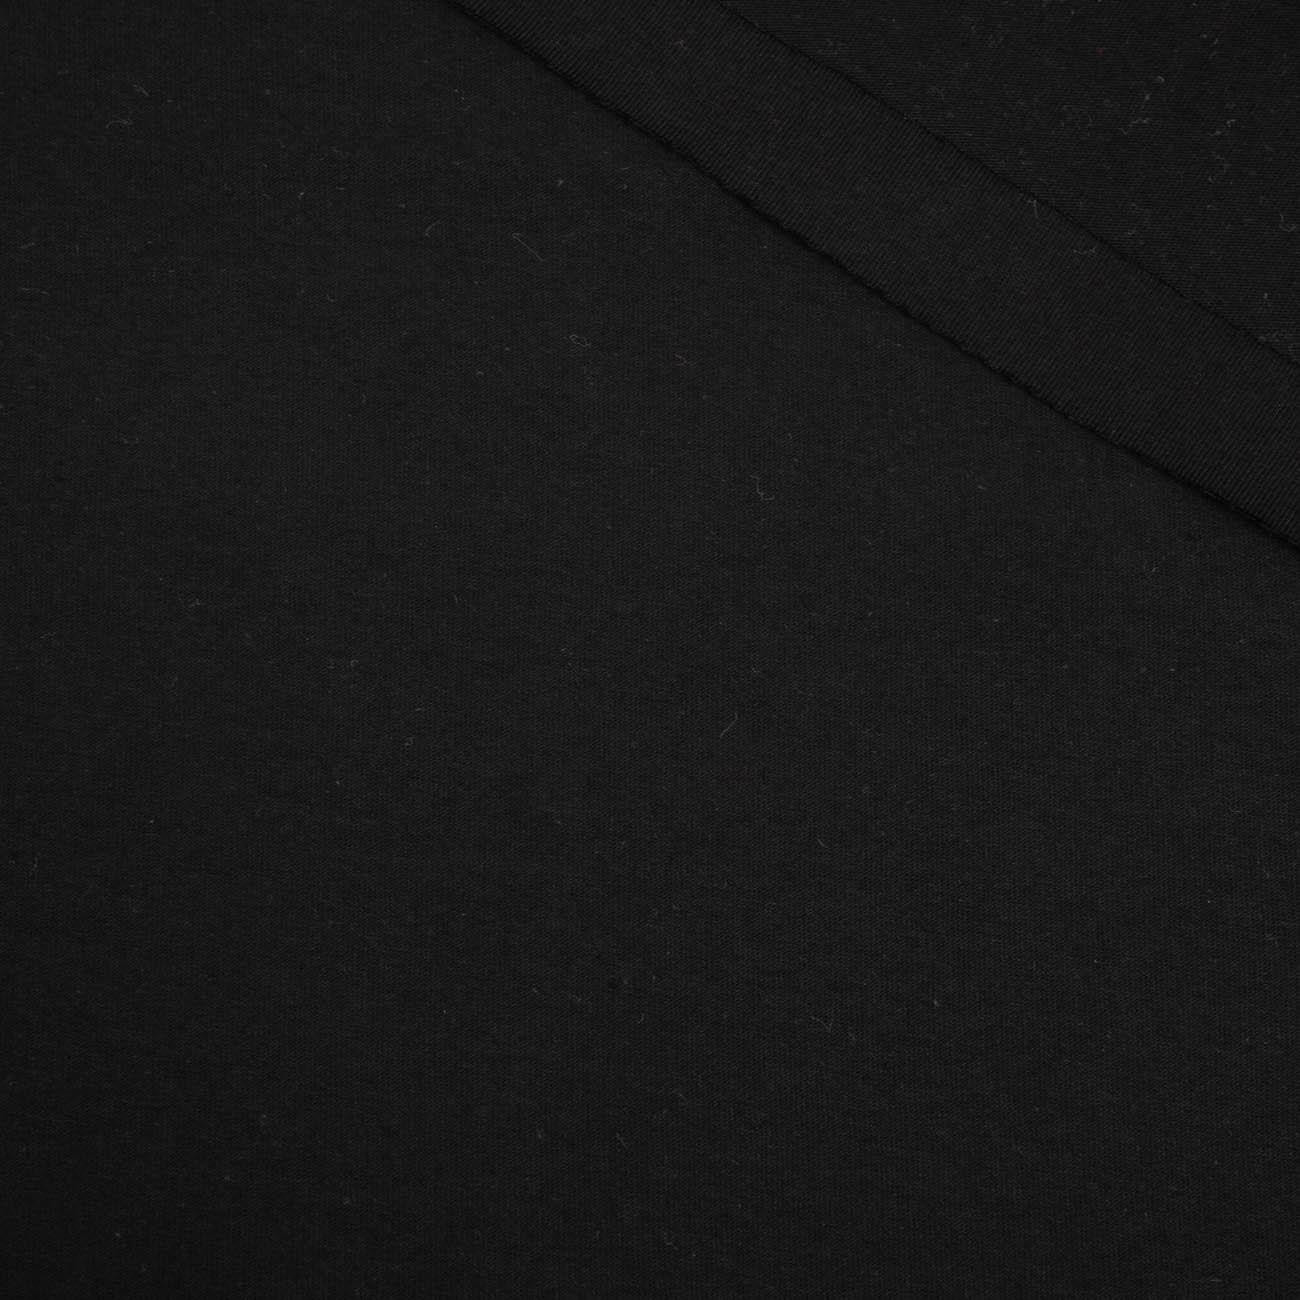 D-16 BLACK - T-shirt knit fabric 100% cotton T170